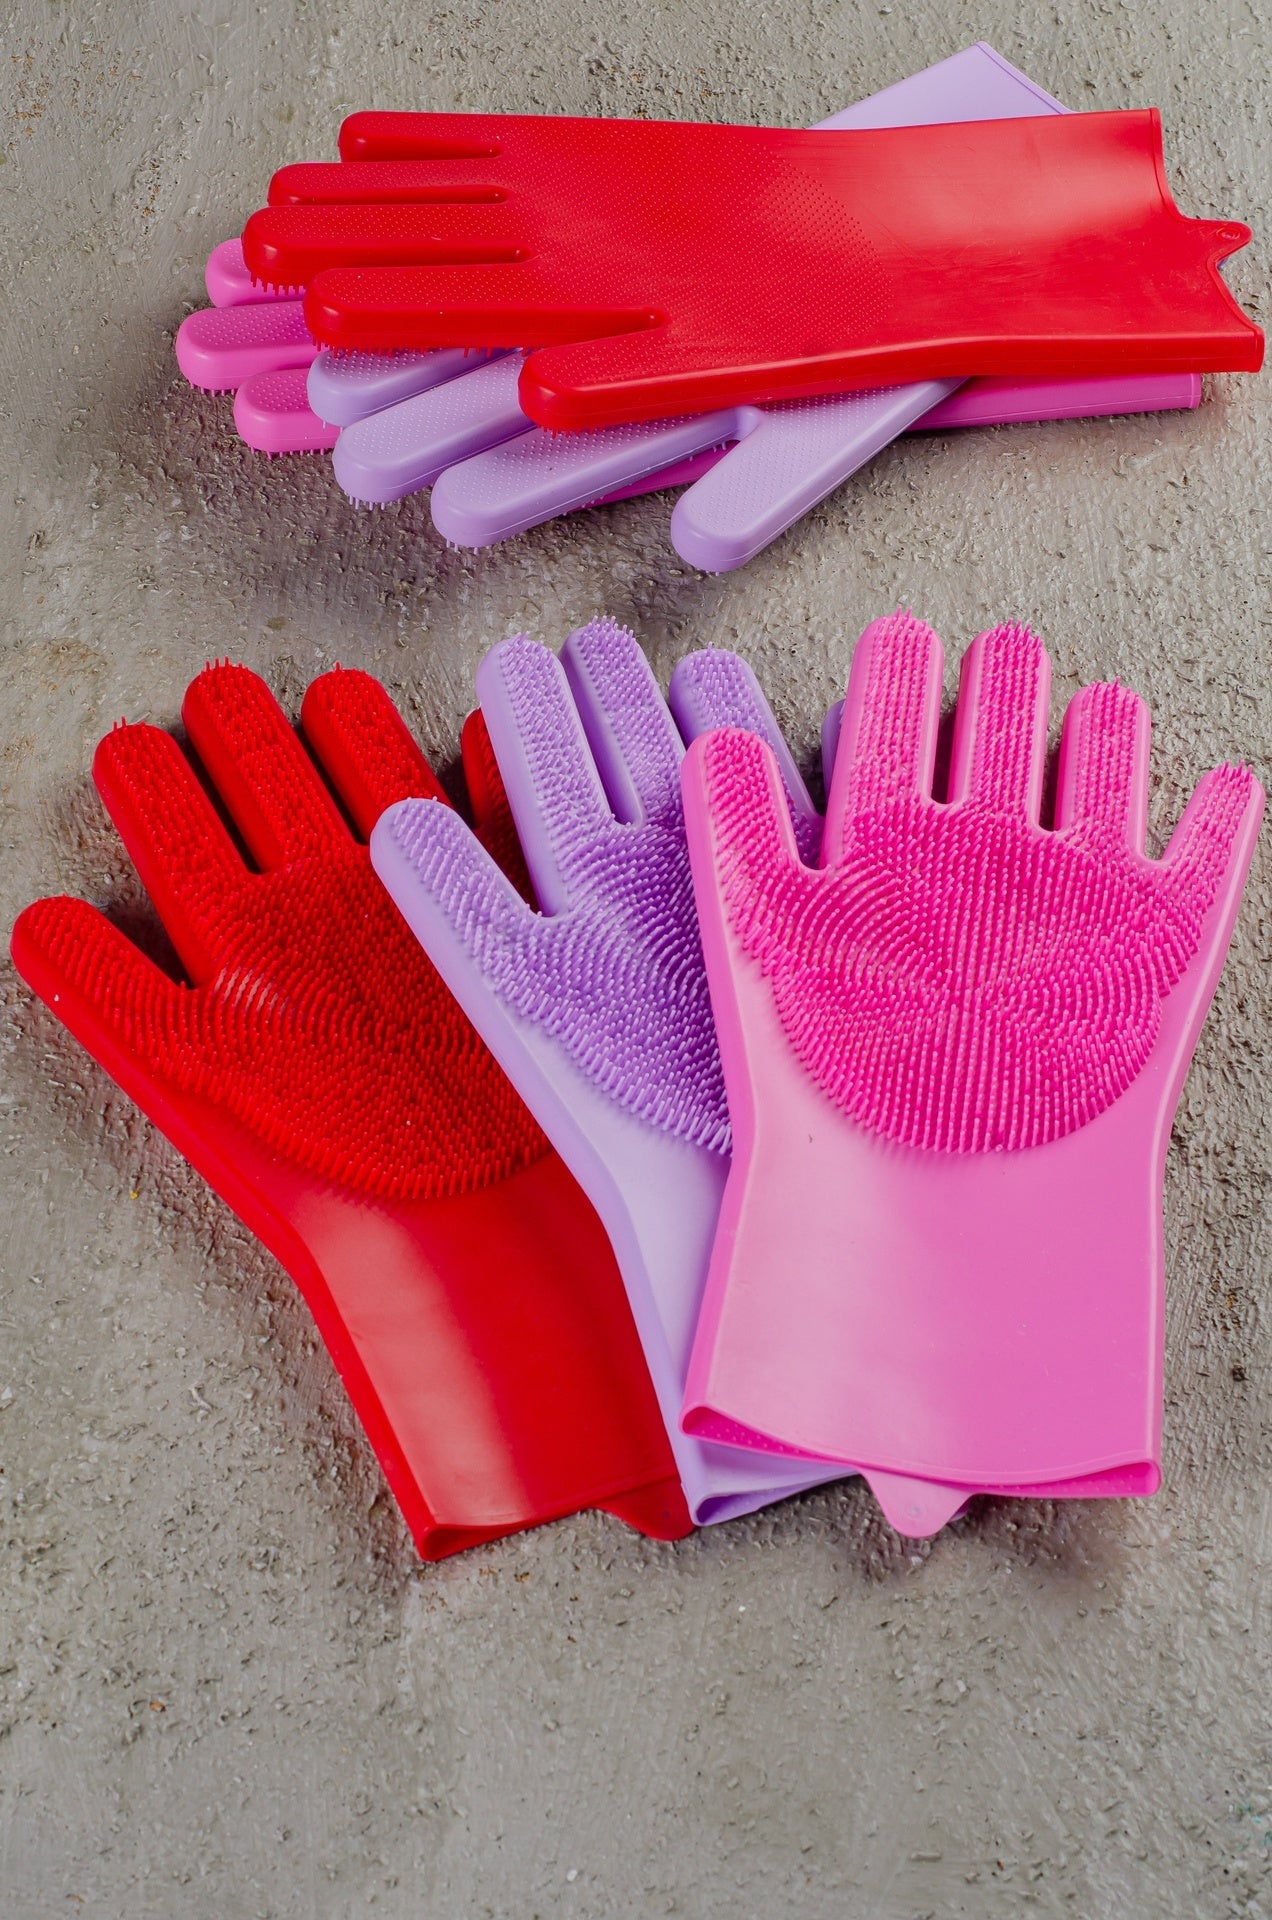 Magic Cleaning Glove